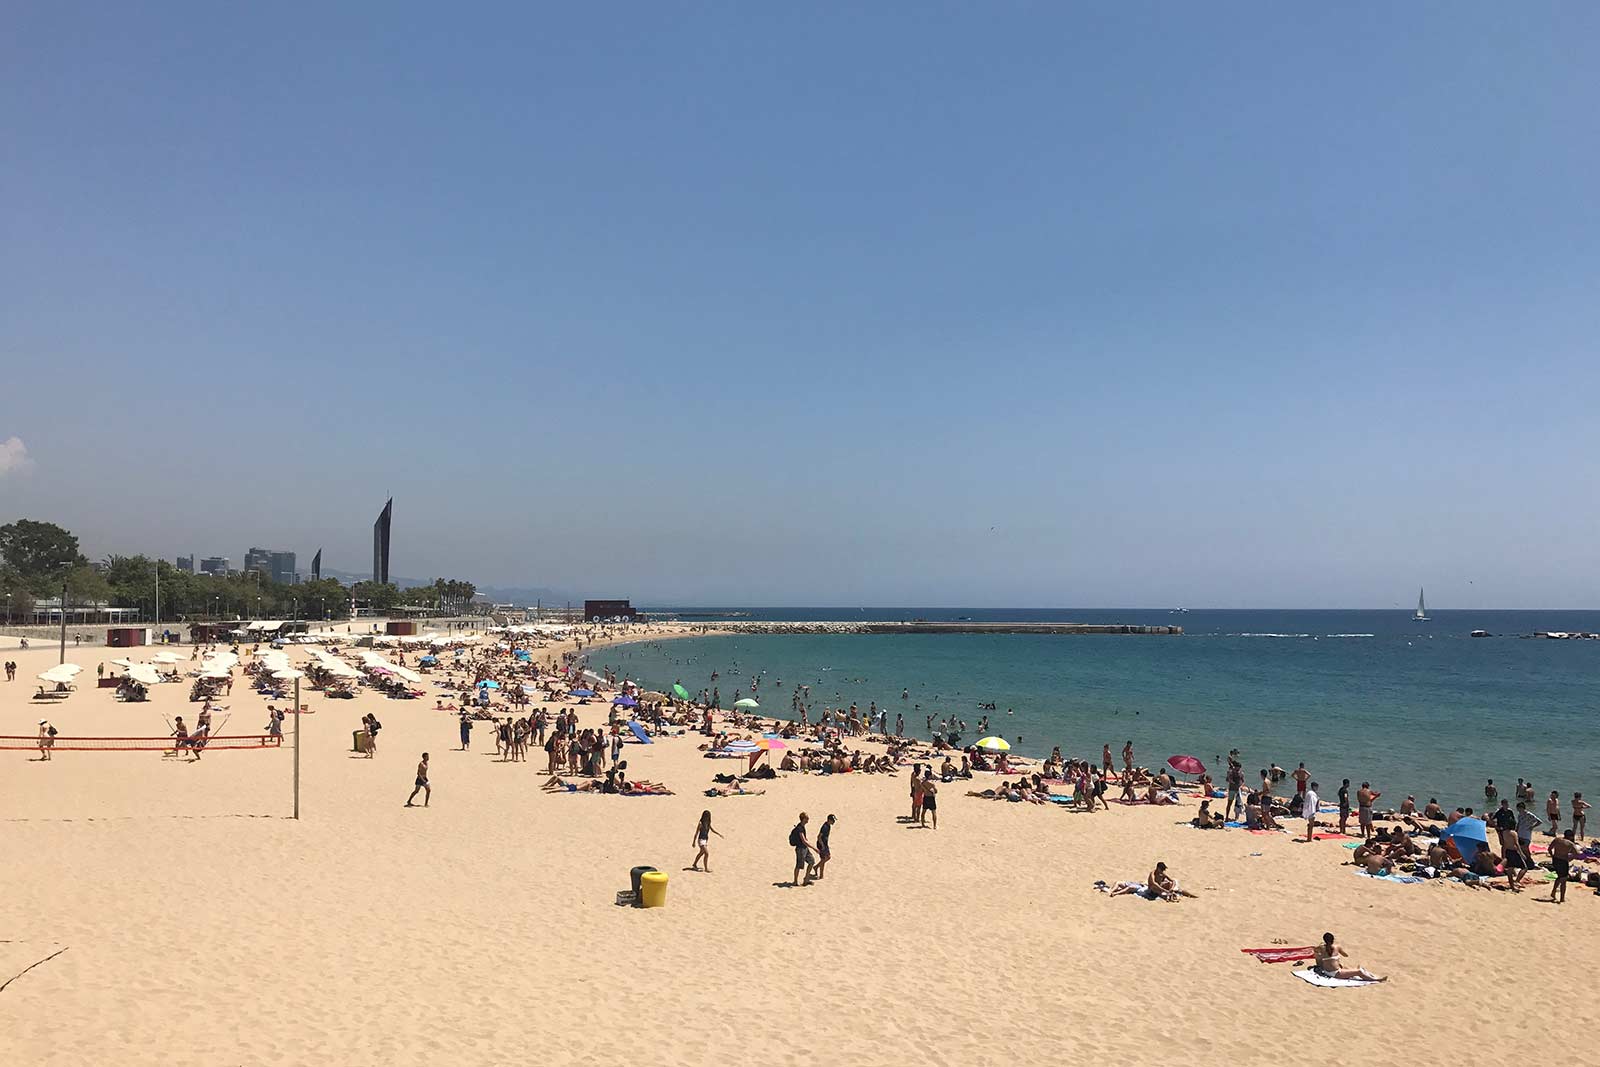 People enjoying the beach at La Barceloneta in Barcelona. 10 things you must do in Barcelona